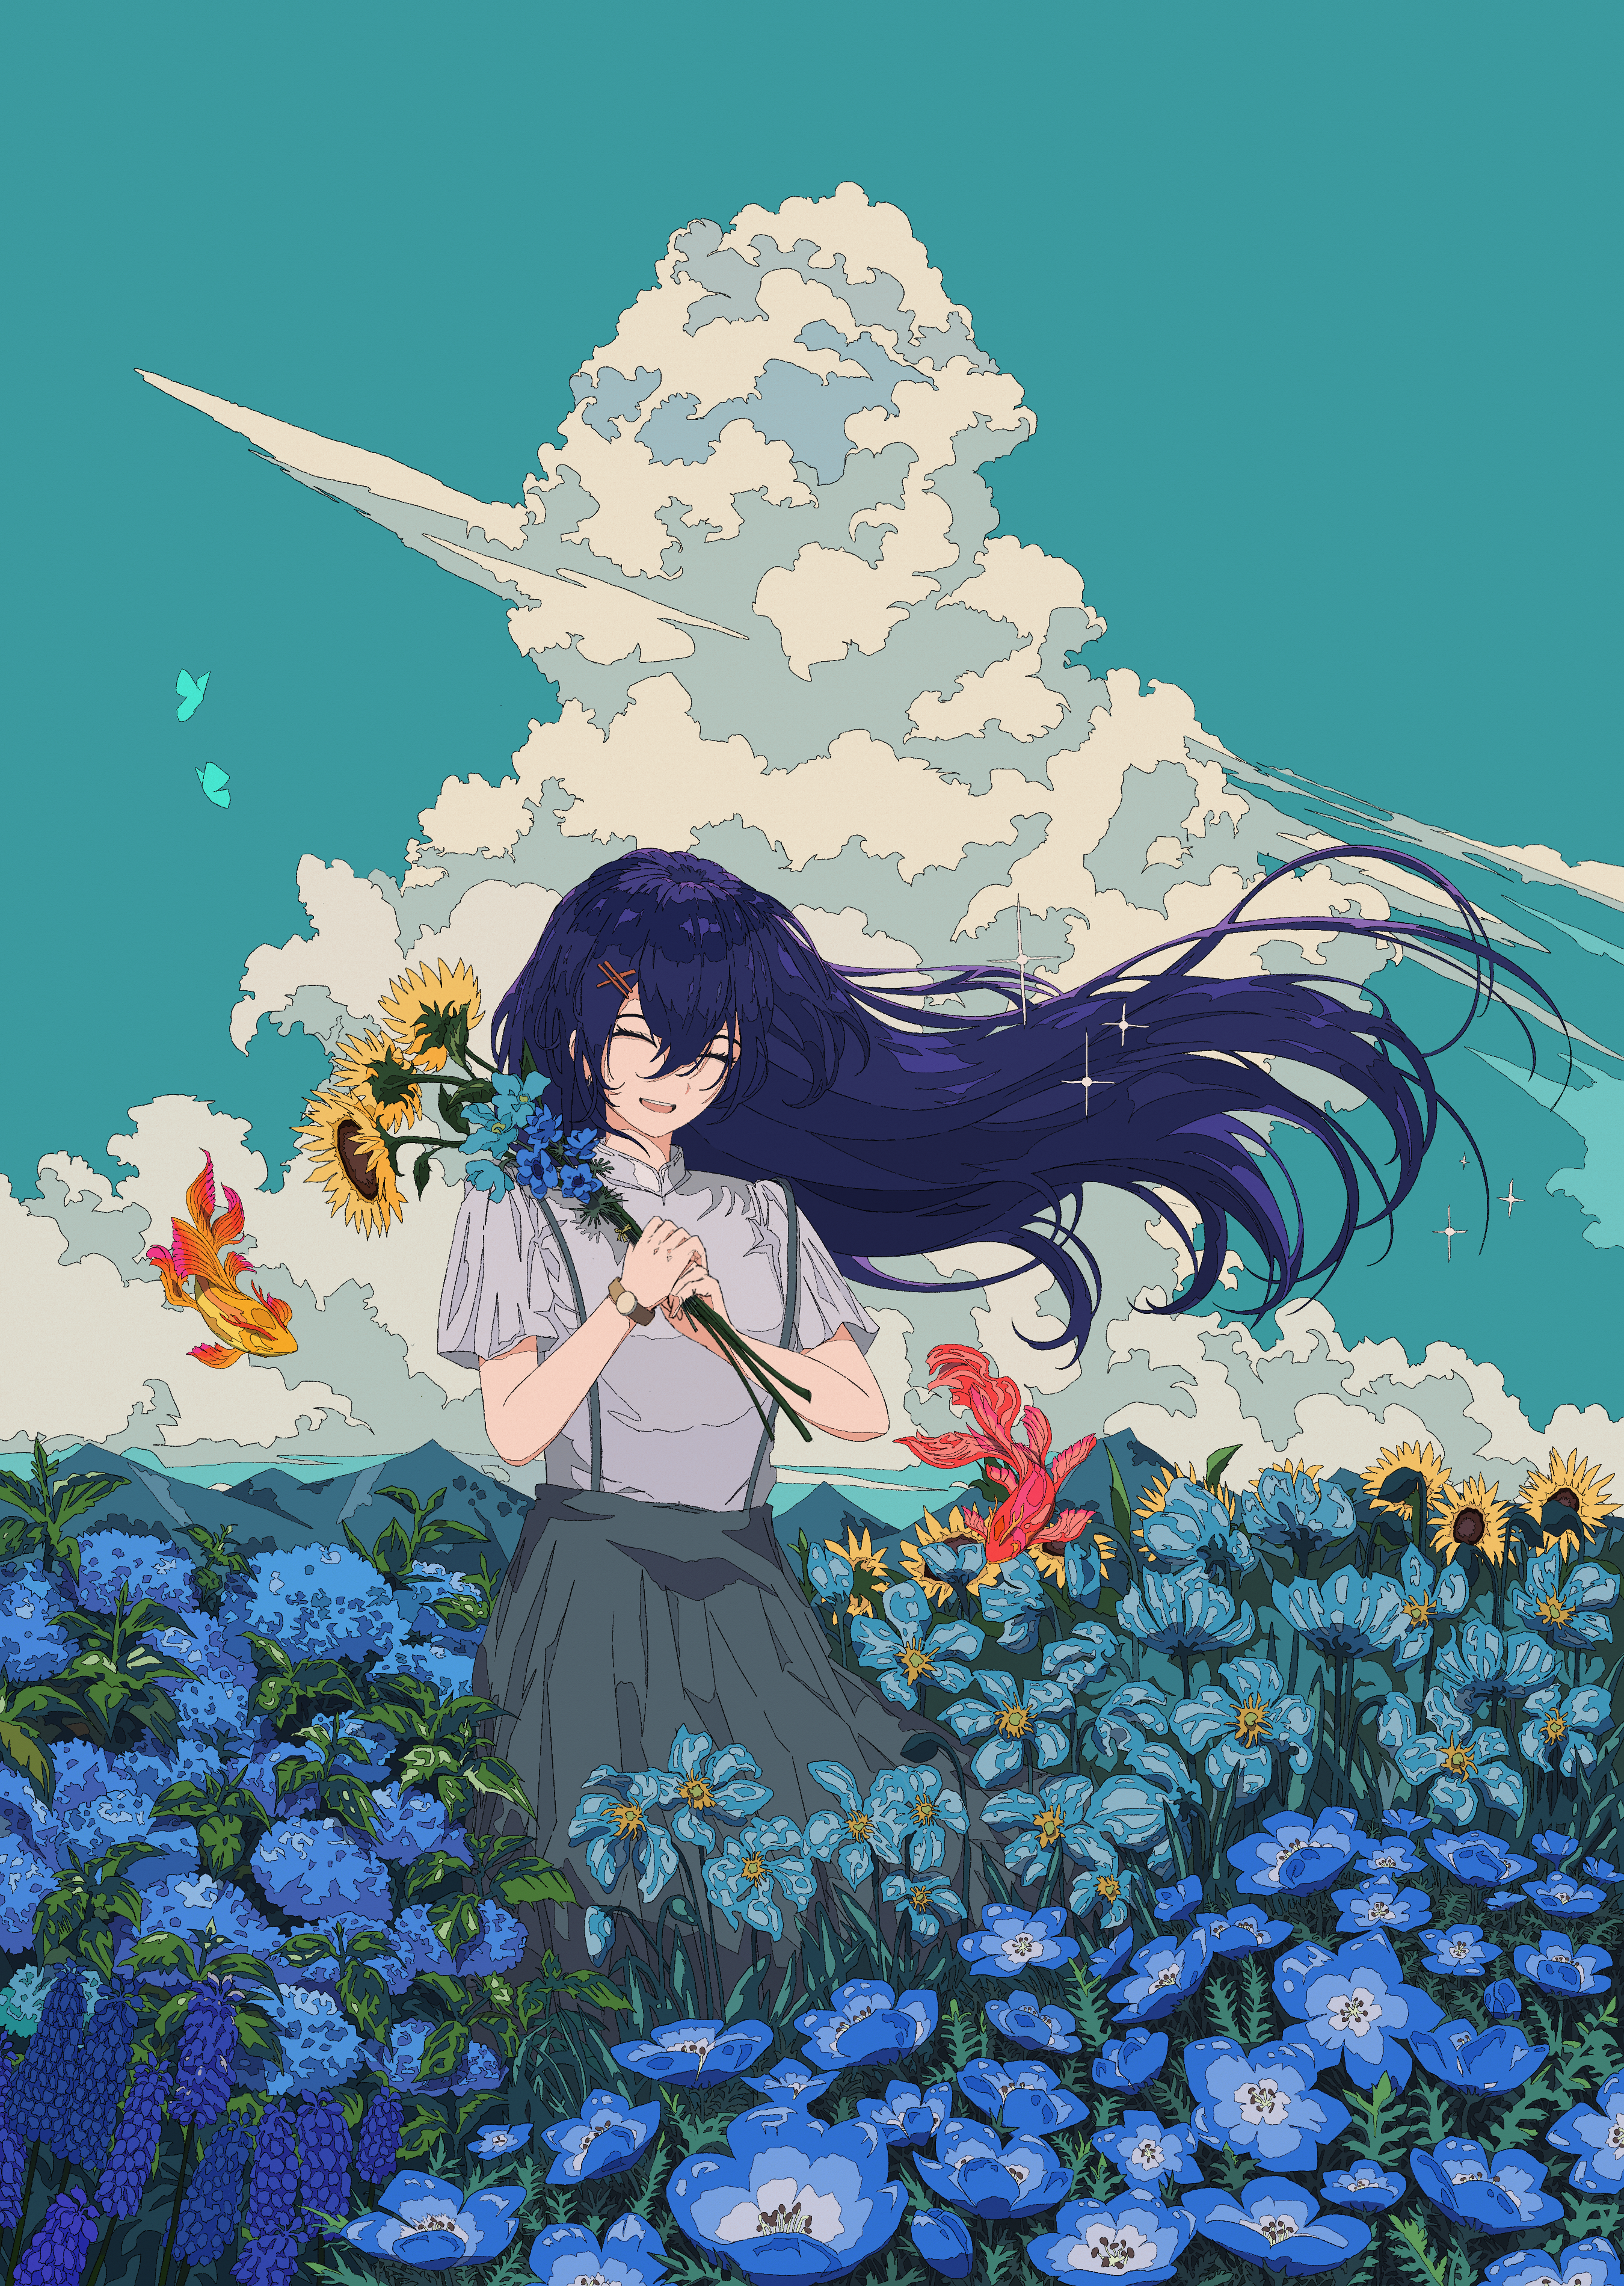 Umijin Anime Digital Art Artwork Illustration Environment Landscape Anime Girls Women Long Hair Blue 2700x3800